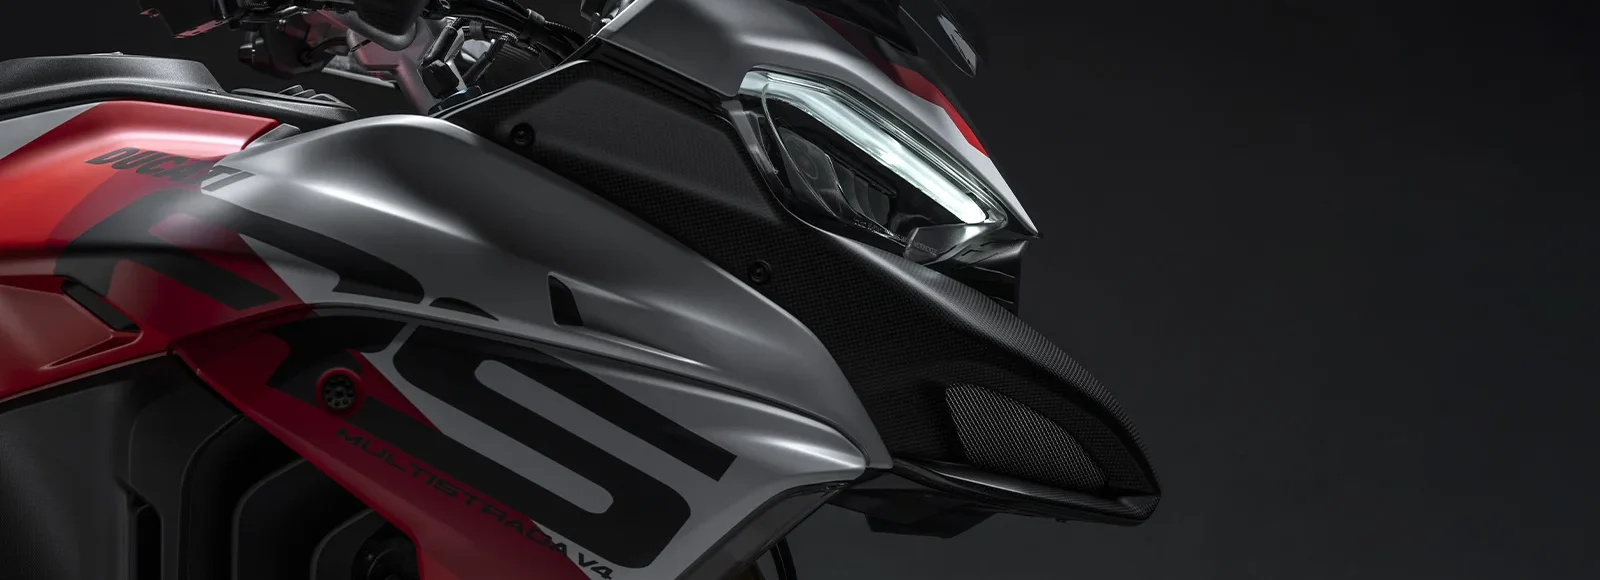 Ducati-Multistrada-RS-DWP24-Overview-hero-short-1600x1000-03